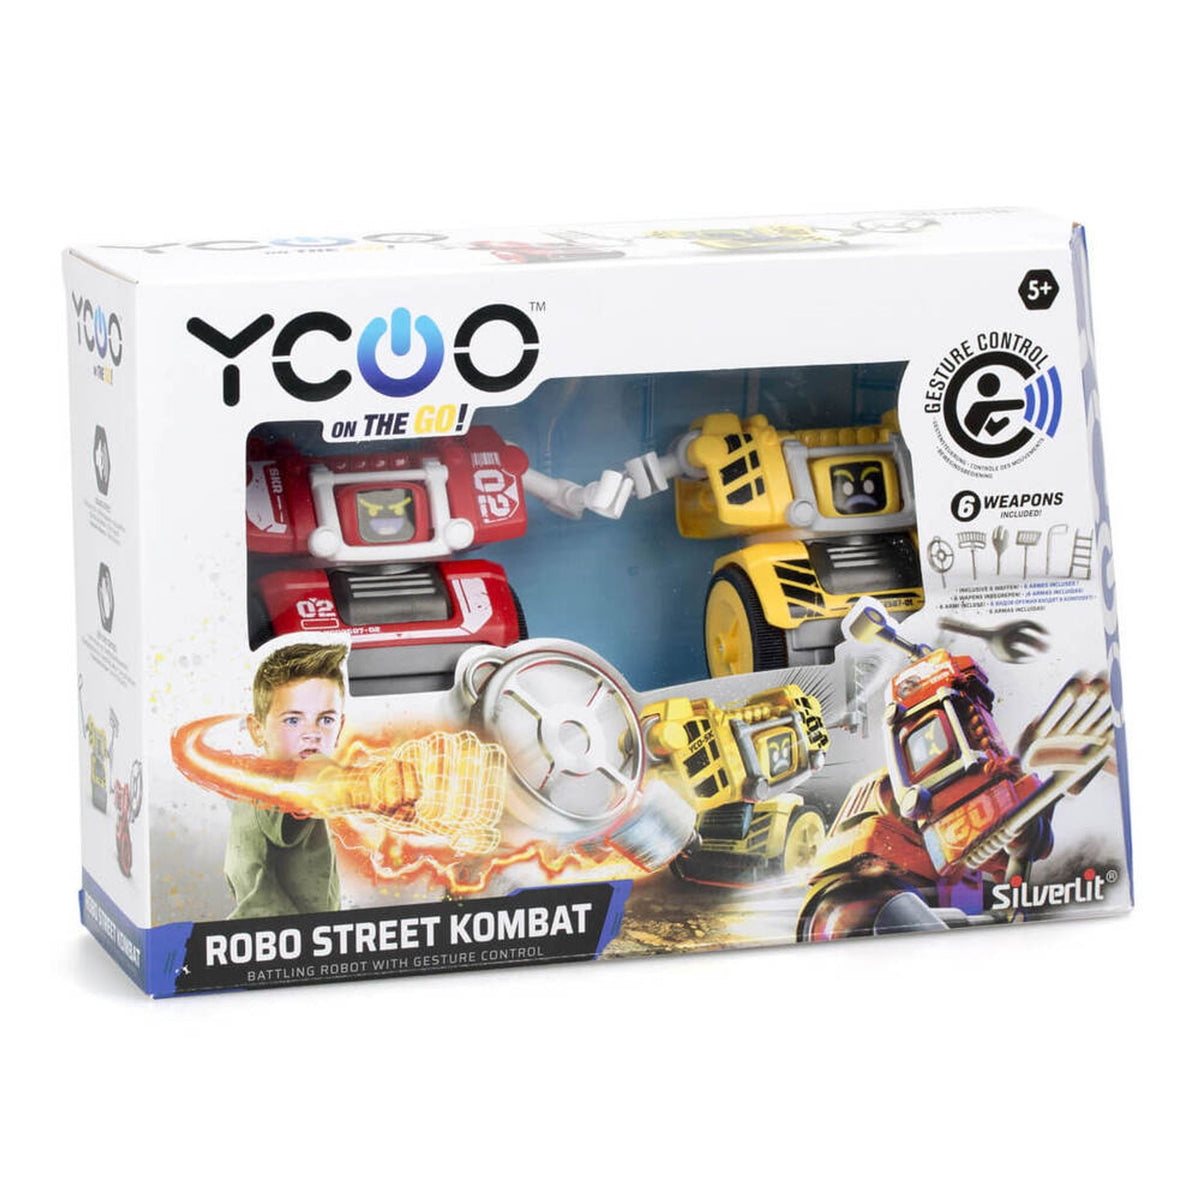 SILVERLIT Robo Street Kombat - Toybox Tales